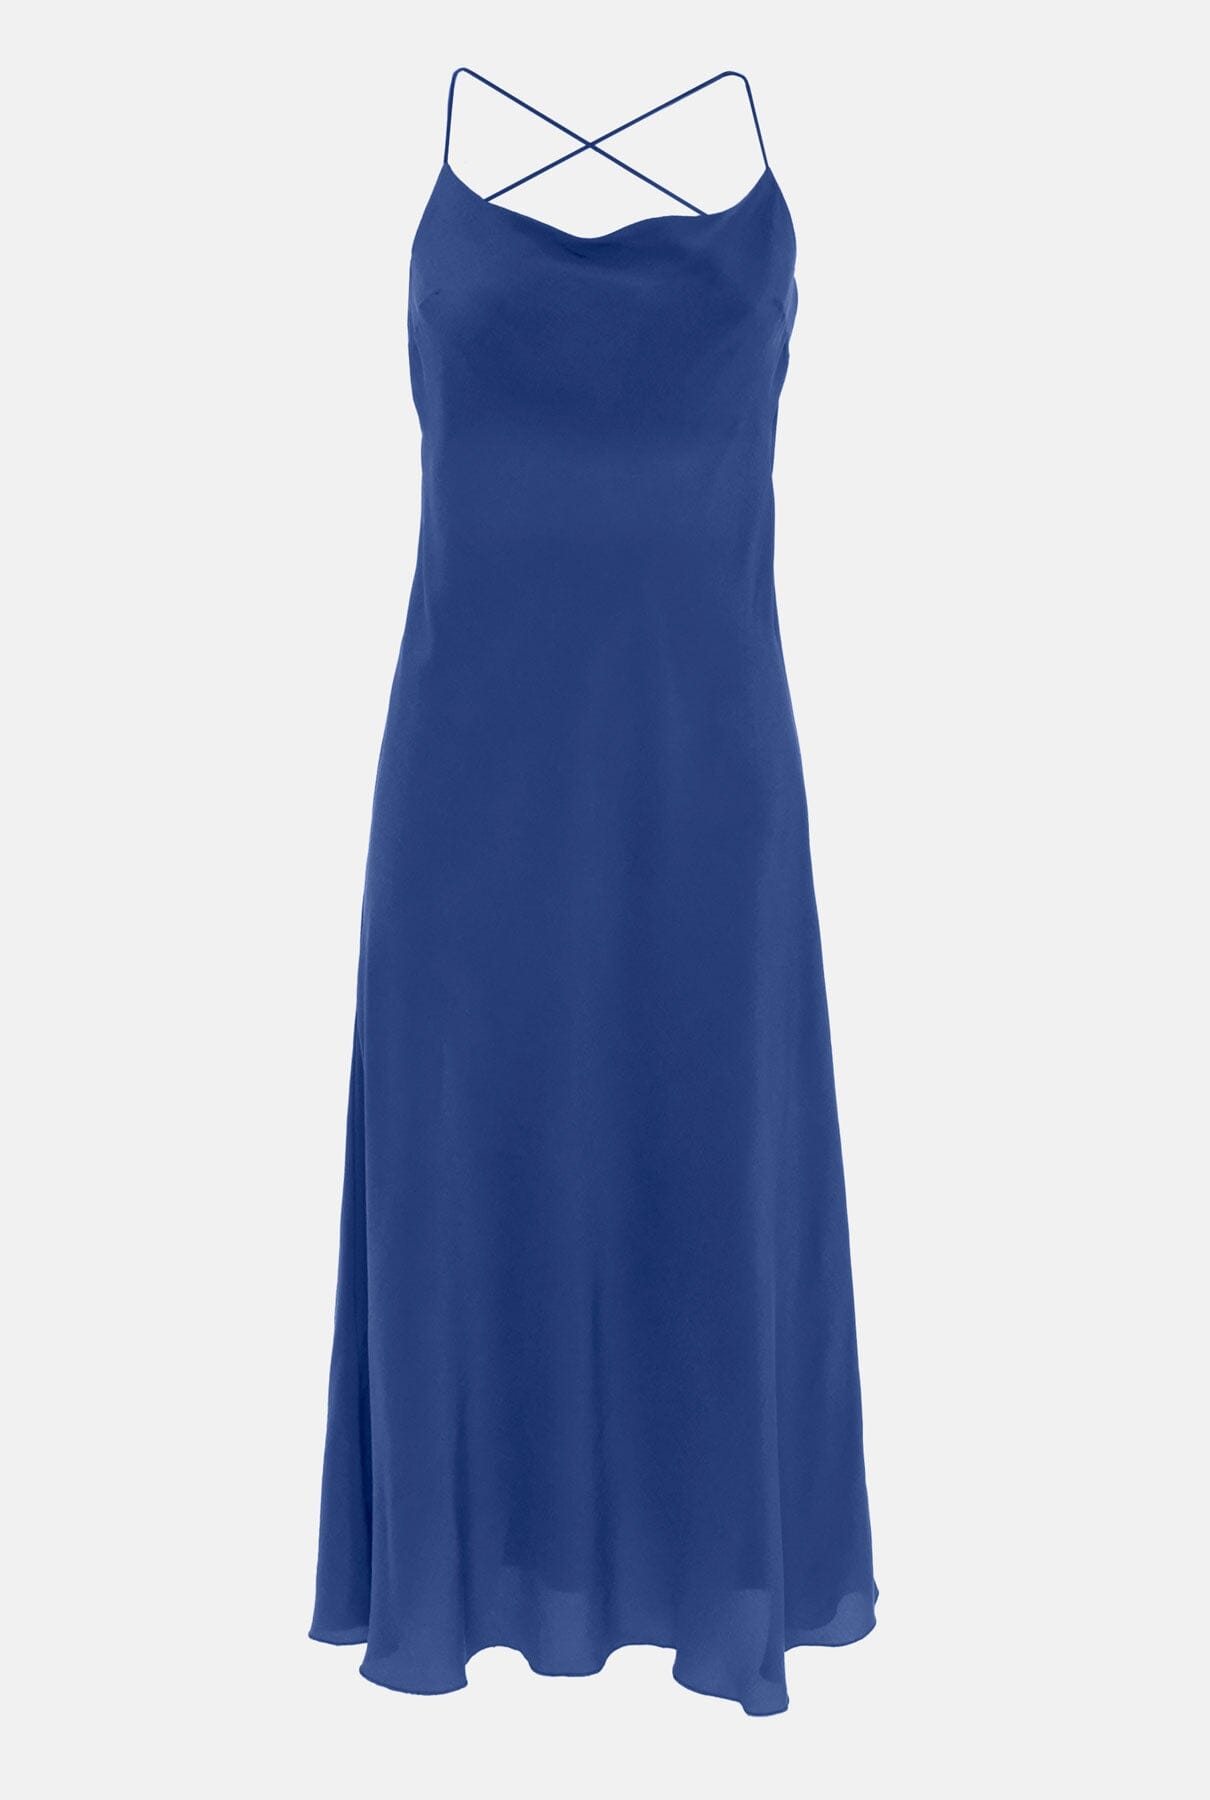 Isabelle Blue Dress Dresses Atelier Aletheia 